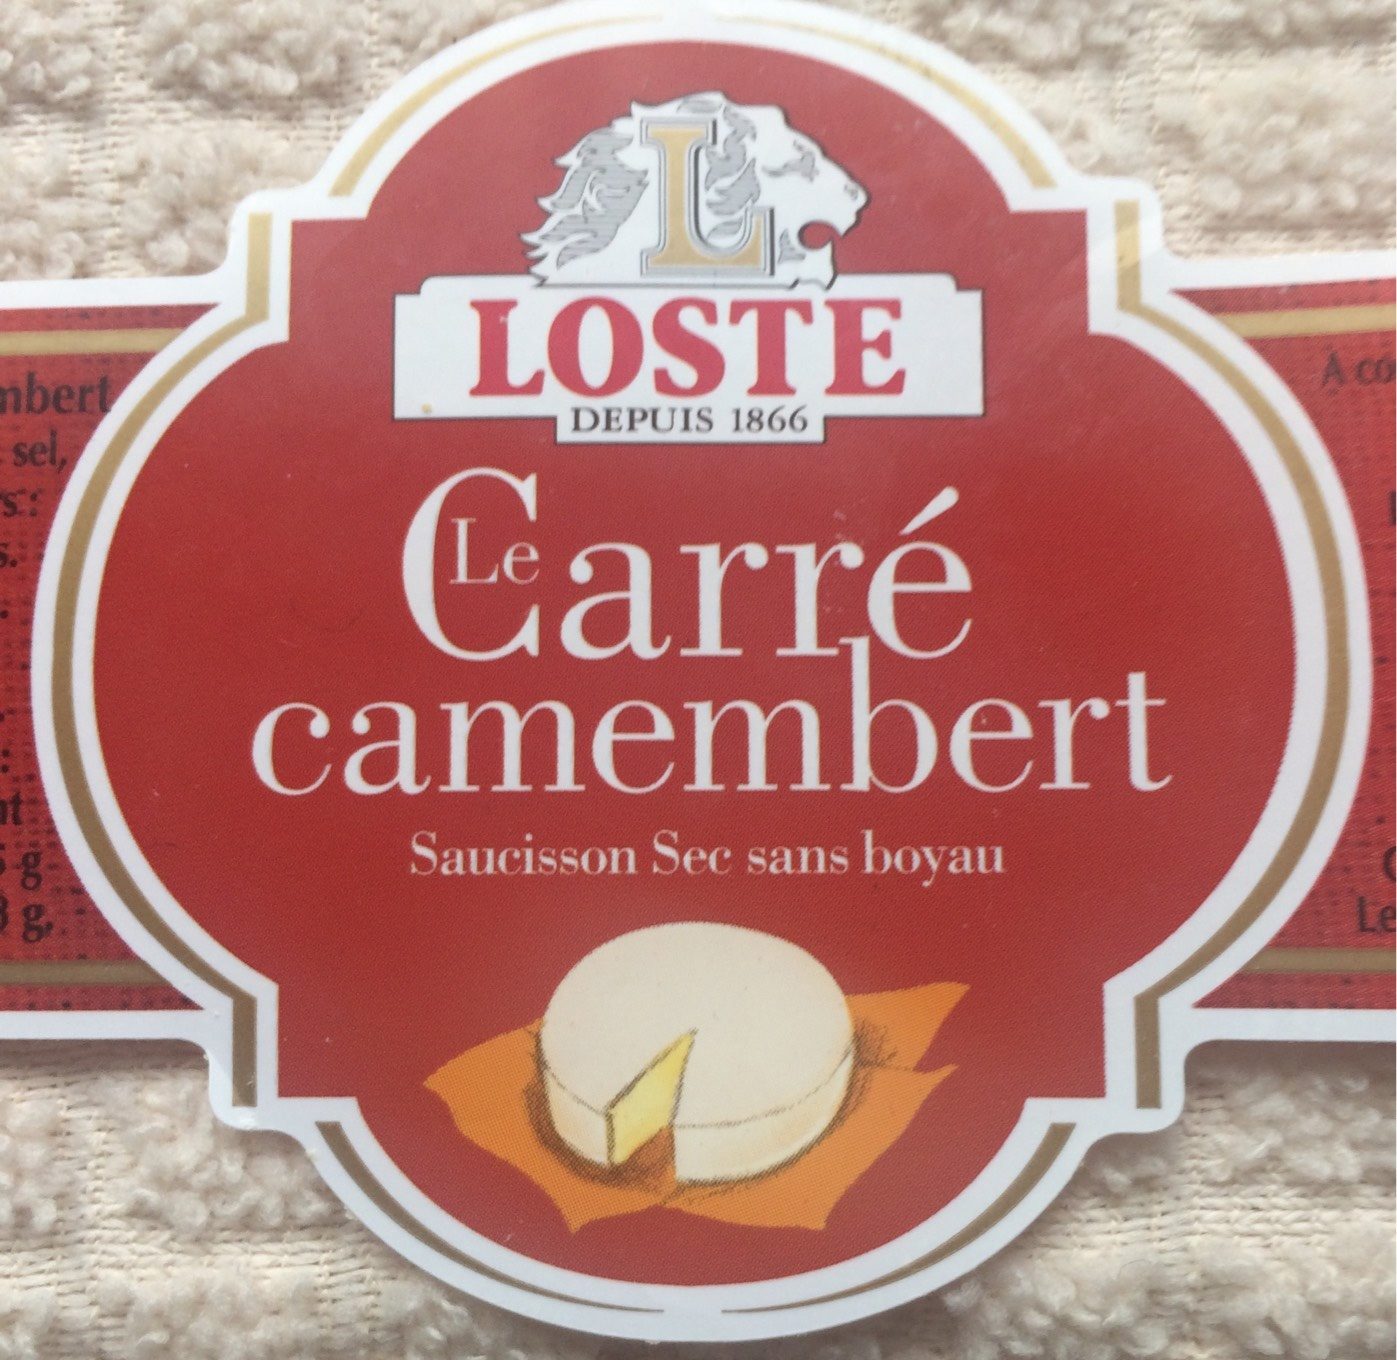 Le carré camembert - Product - fr